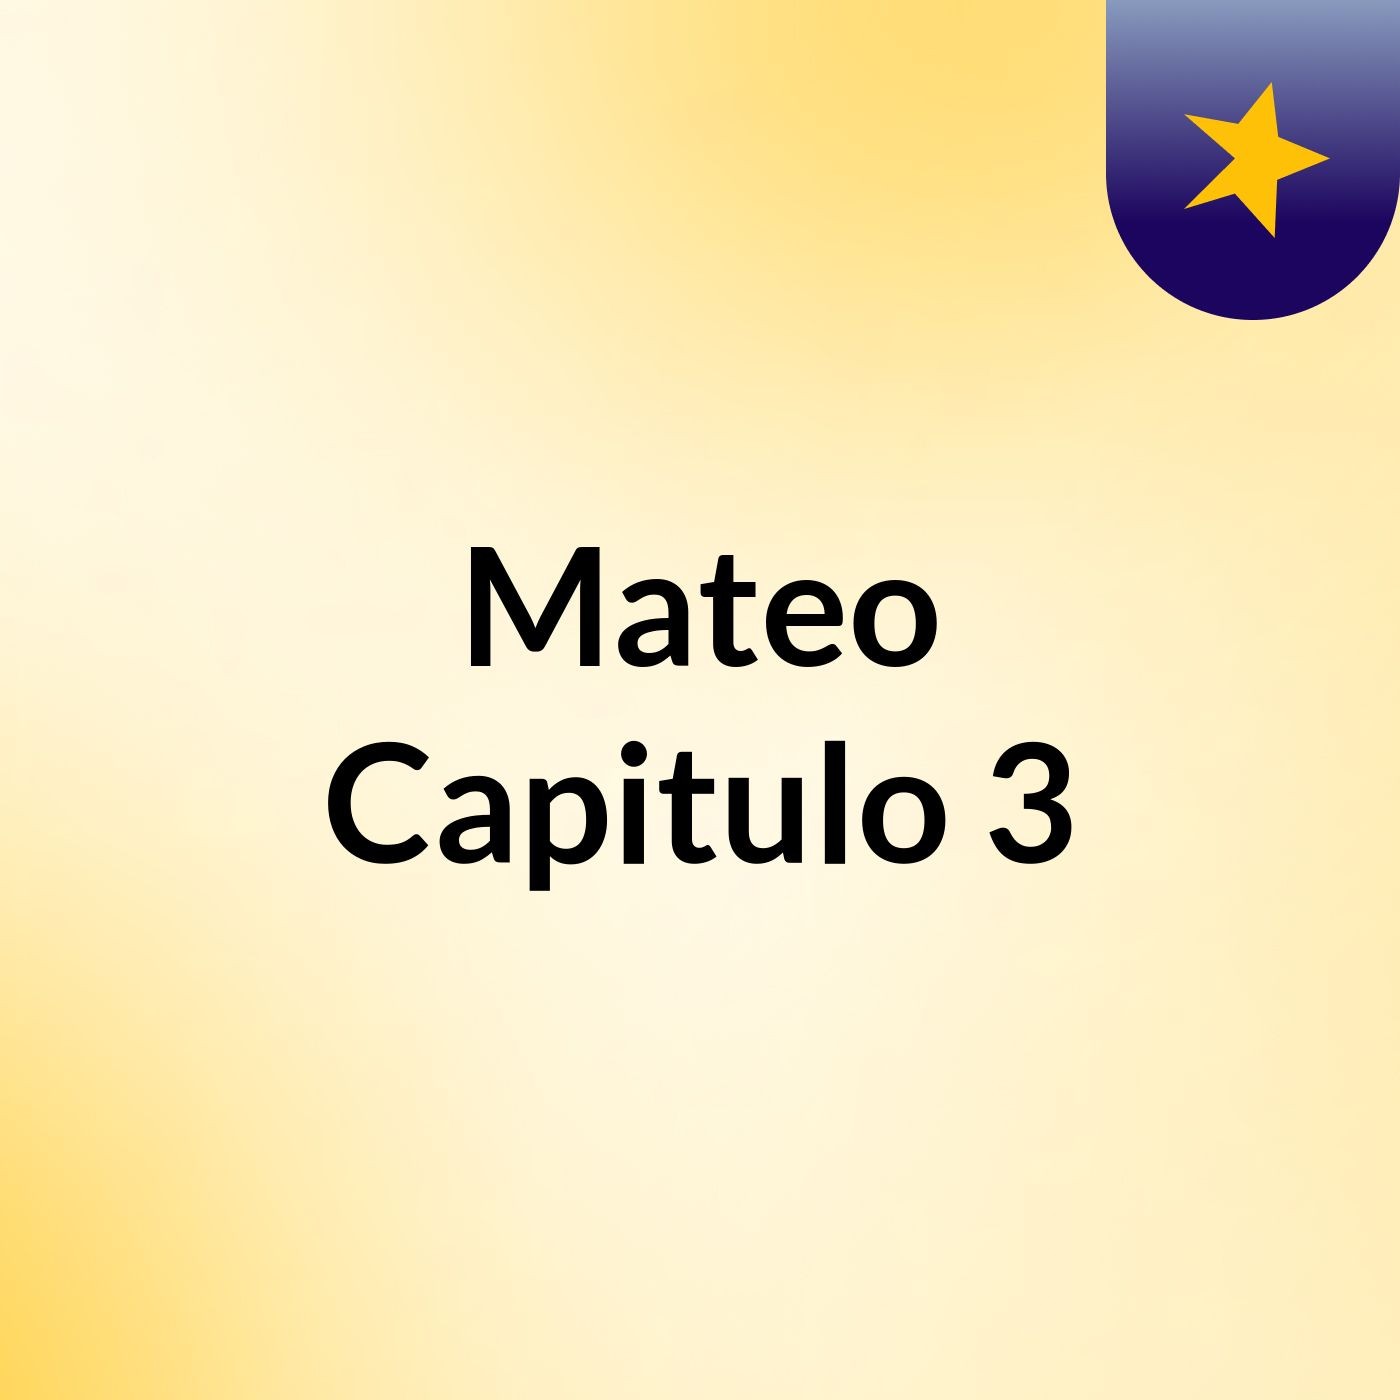 Mateo Capitulo 3